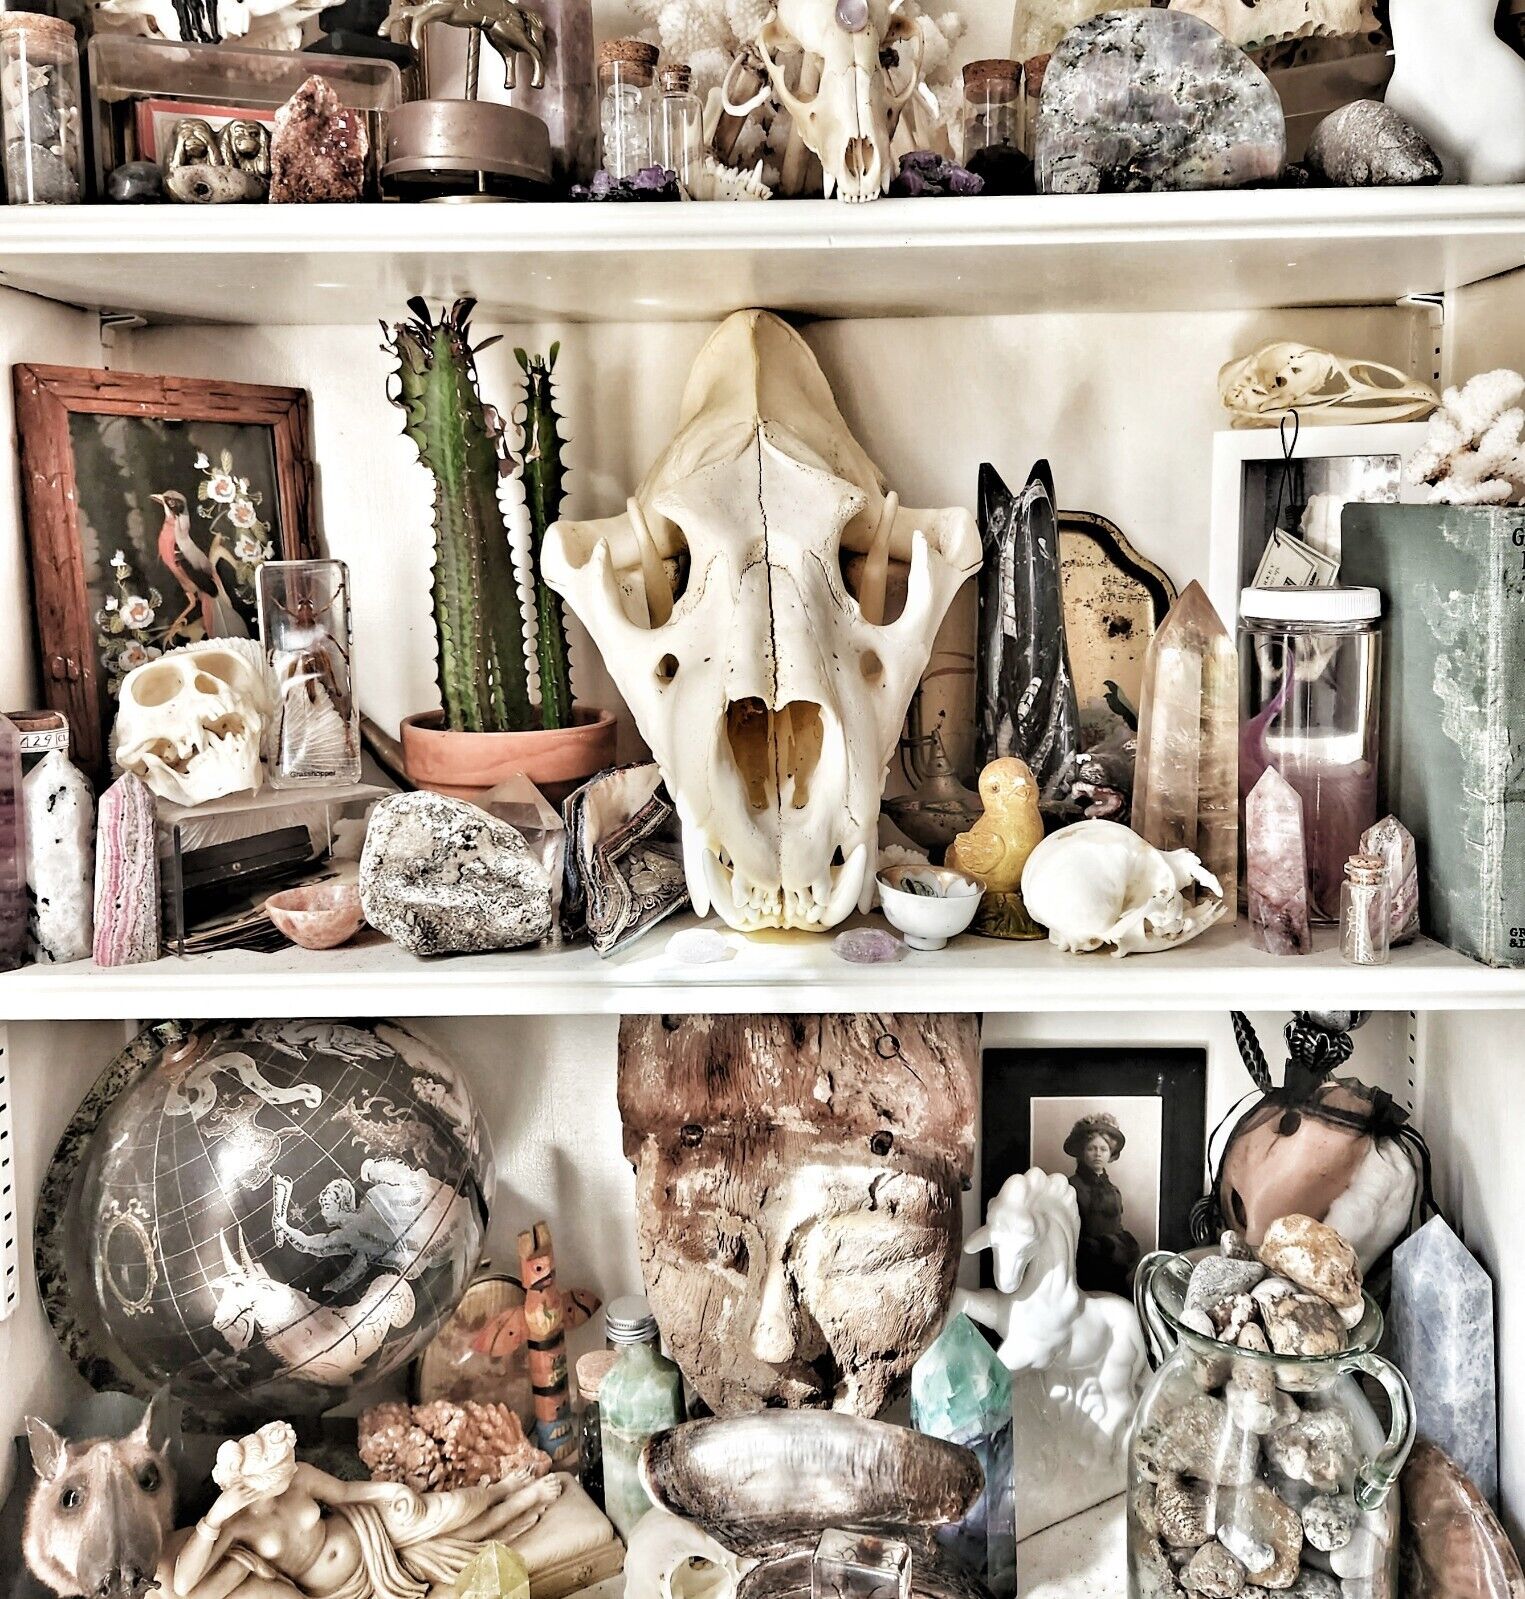 Oddities lot, Oddities,Curiosities, Animal Bones, Skulls, Taxidermy, Skull